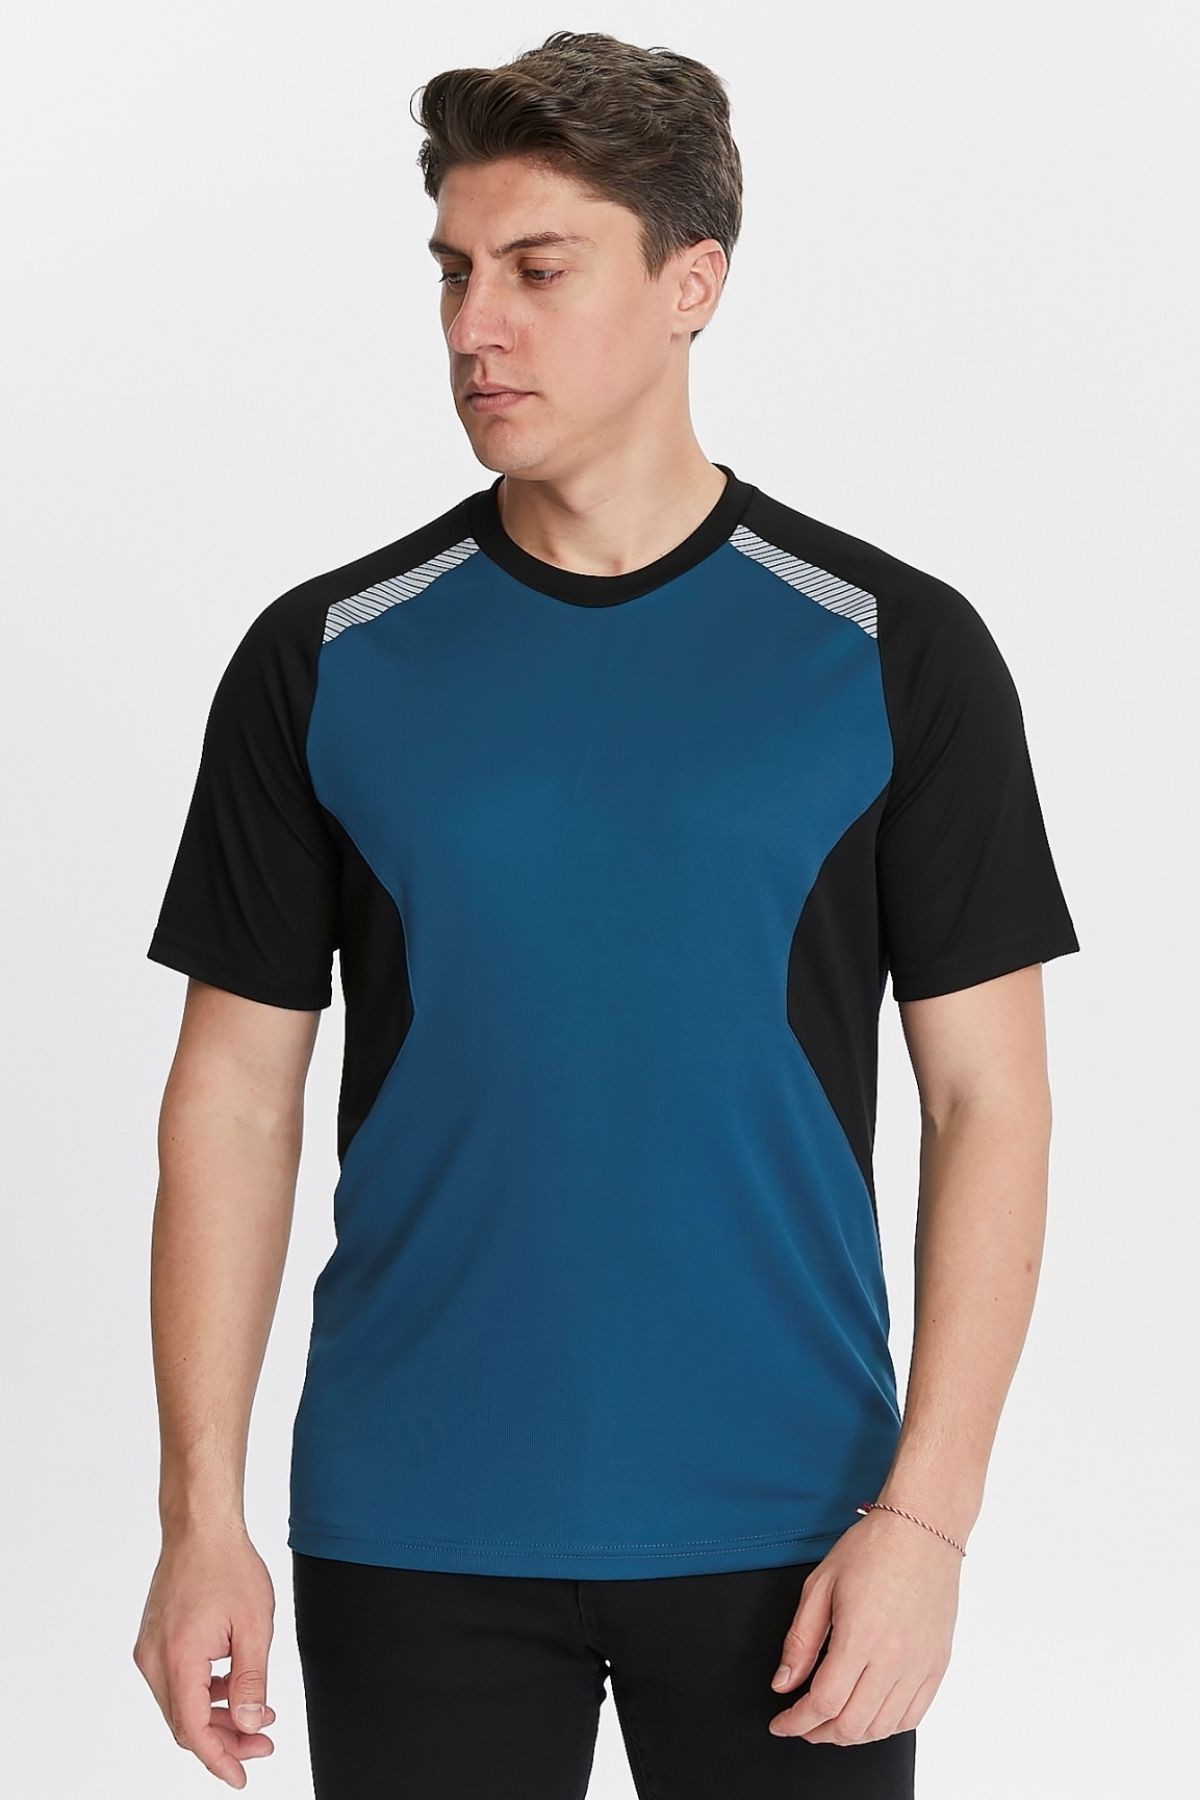 Uniprom Erkek Sıfır Yaka Tişört Nefes Alan Kumaş Procool Spor Outdoor T-shirt İndigo-Siyah